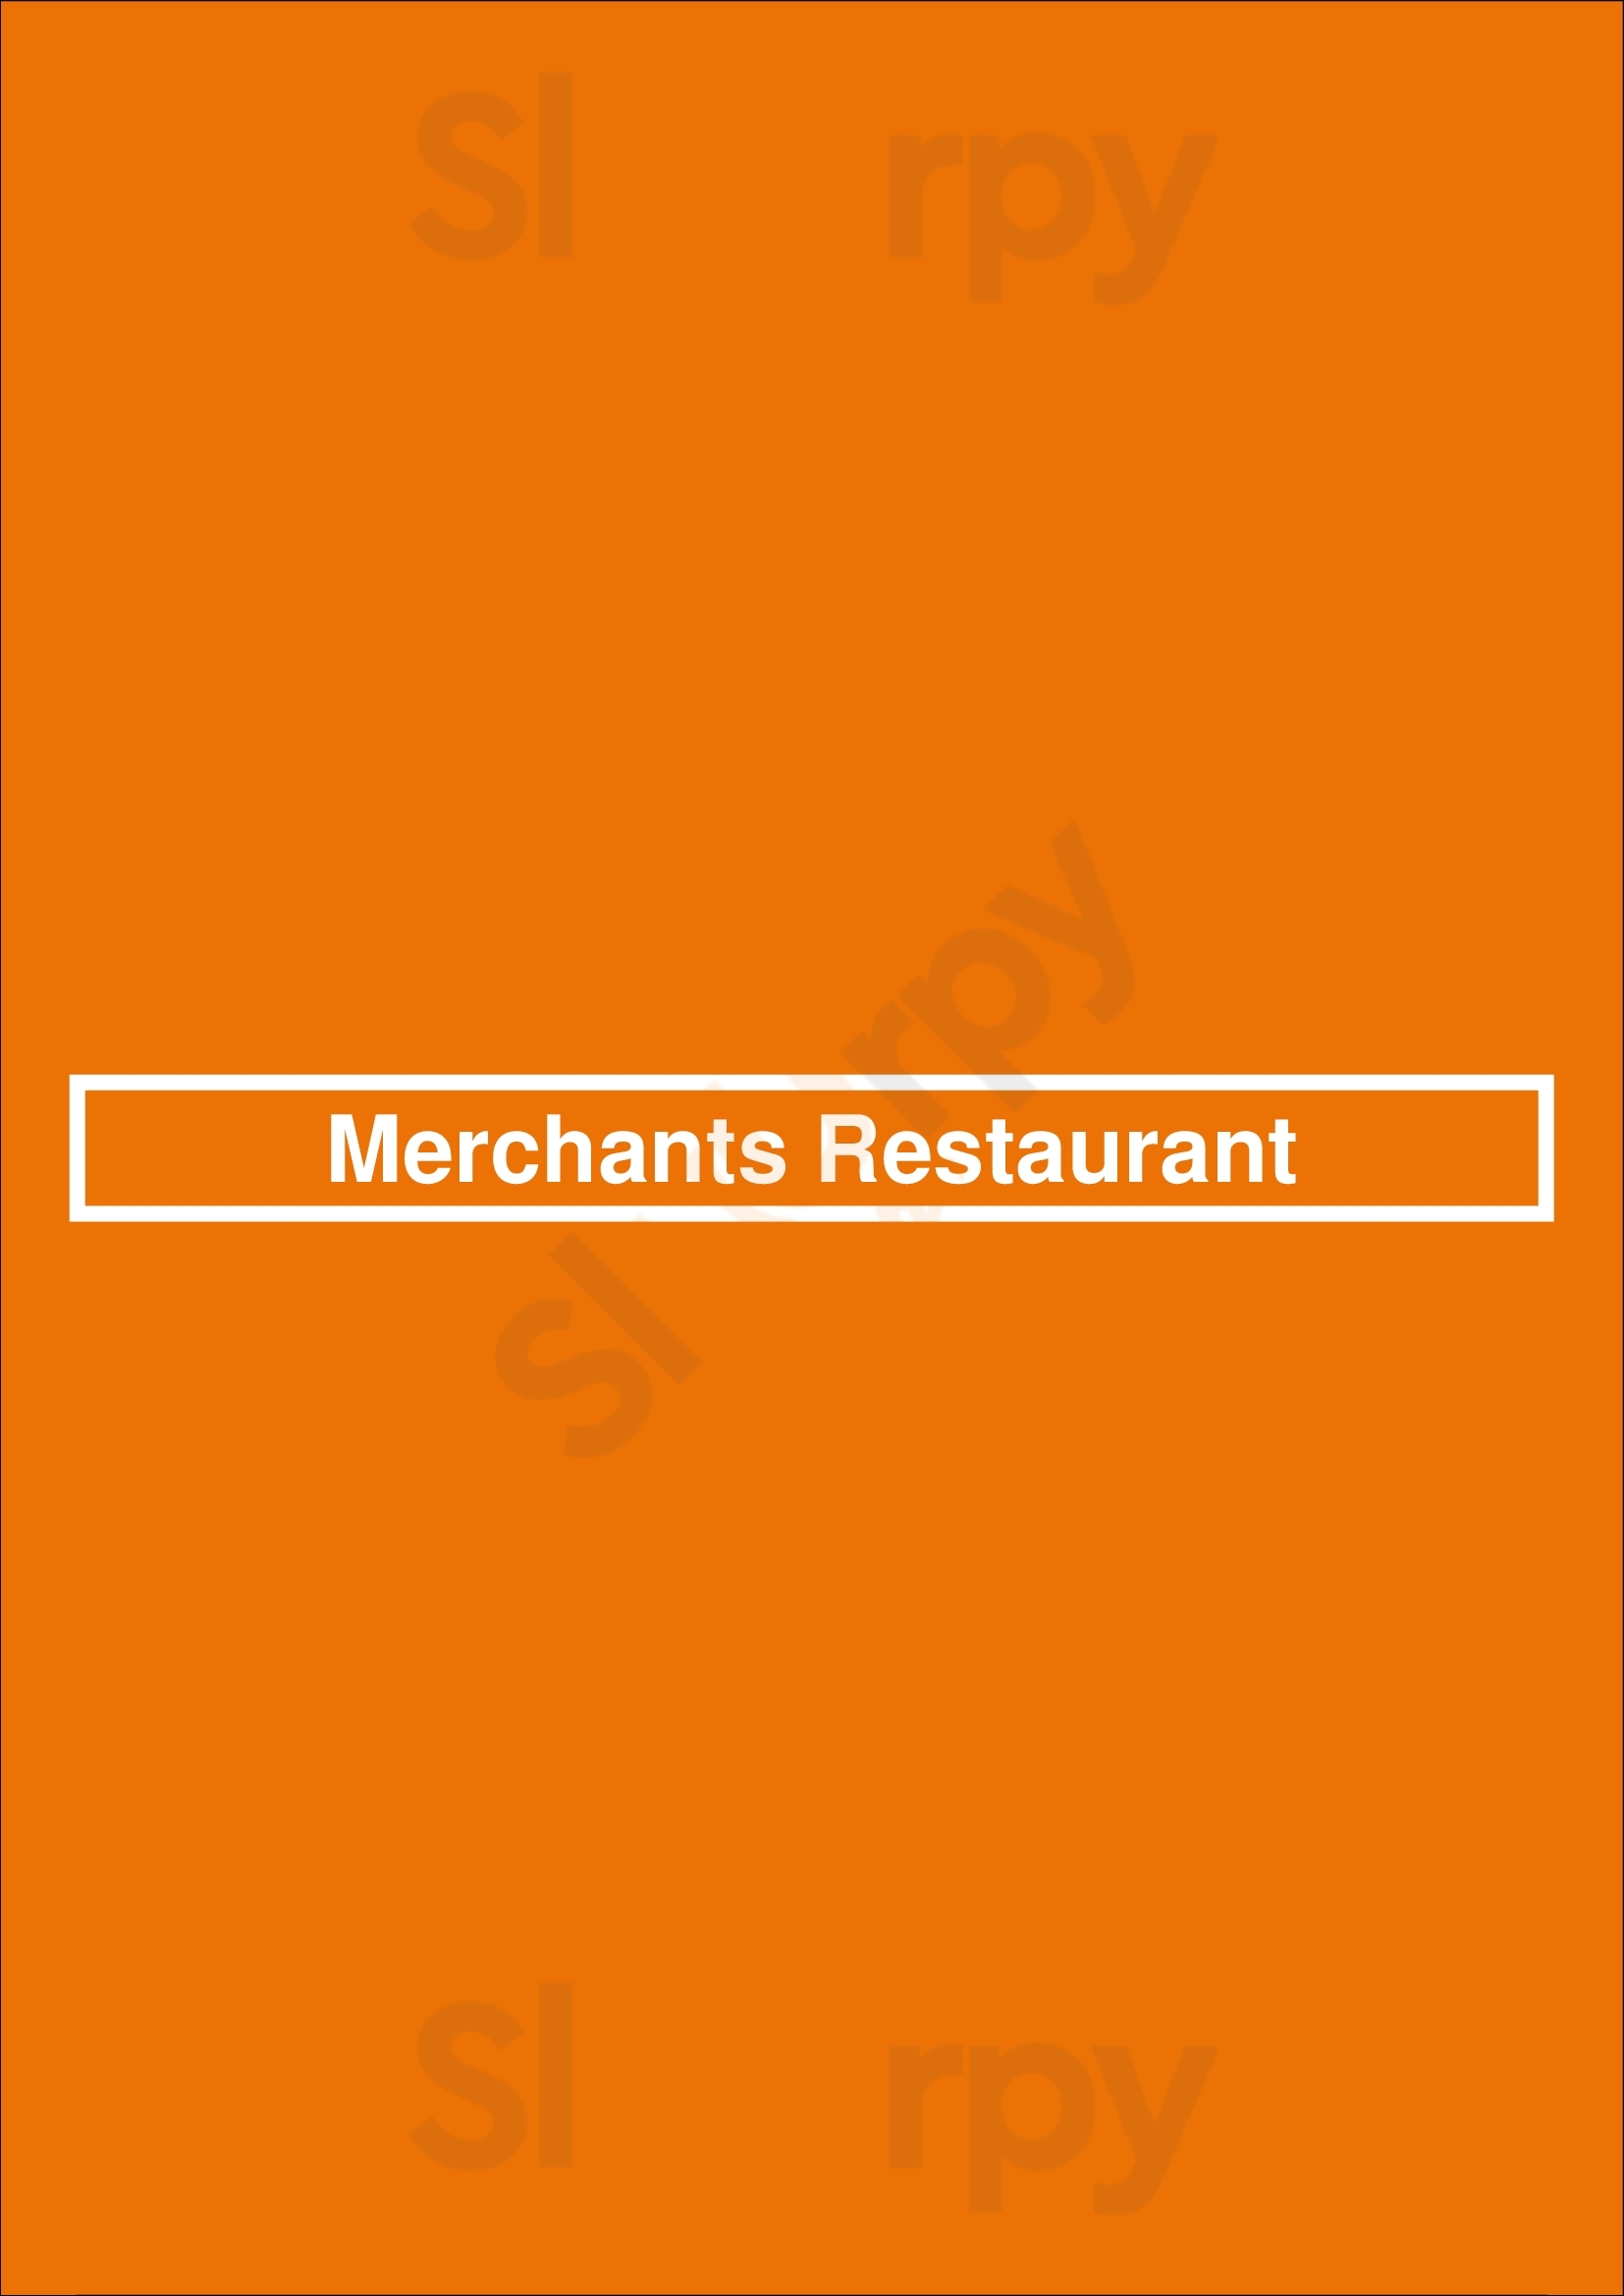 Merchants Restaurant Nashville Menu - 1